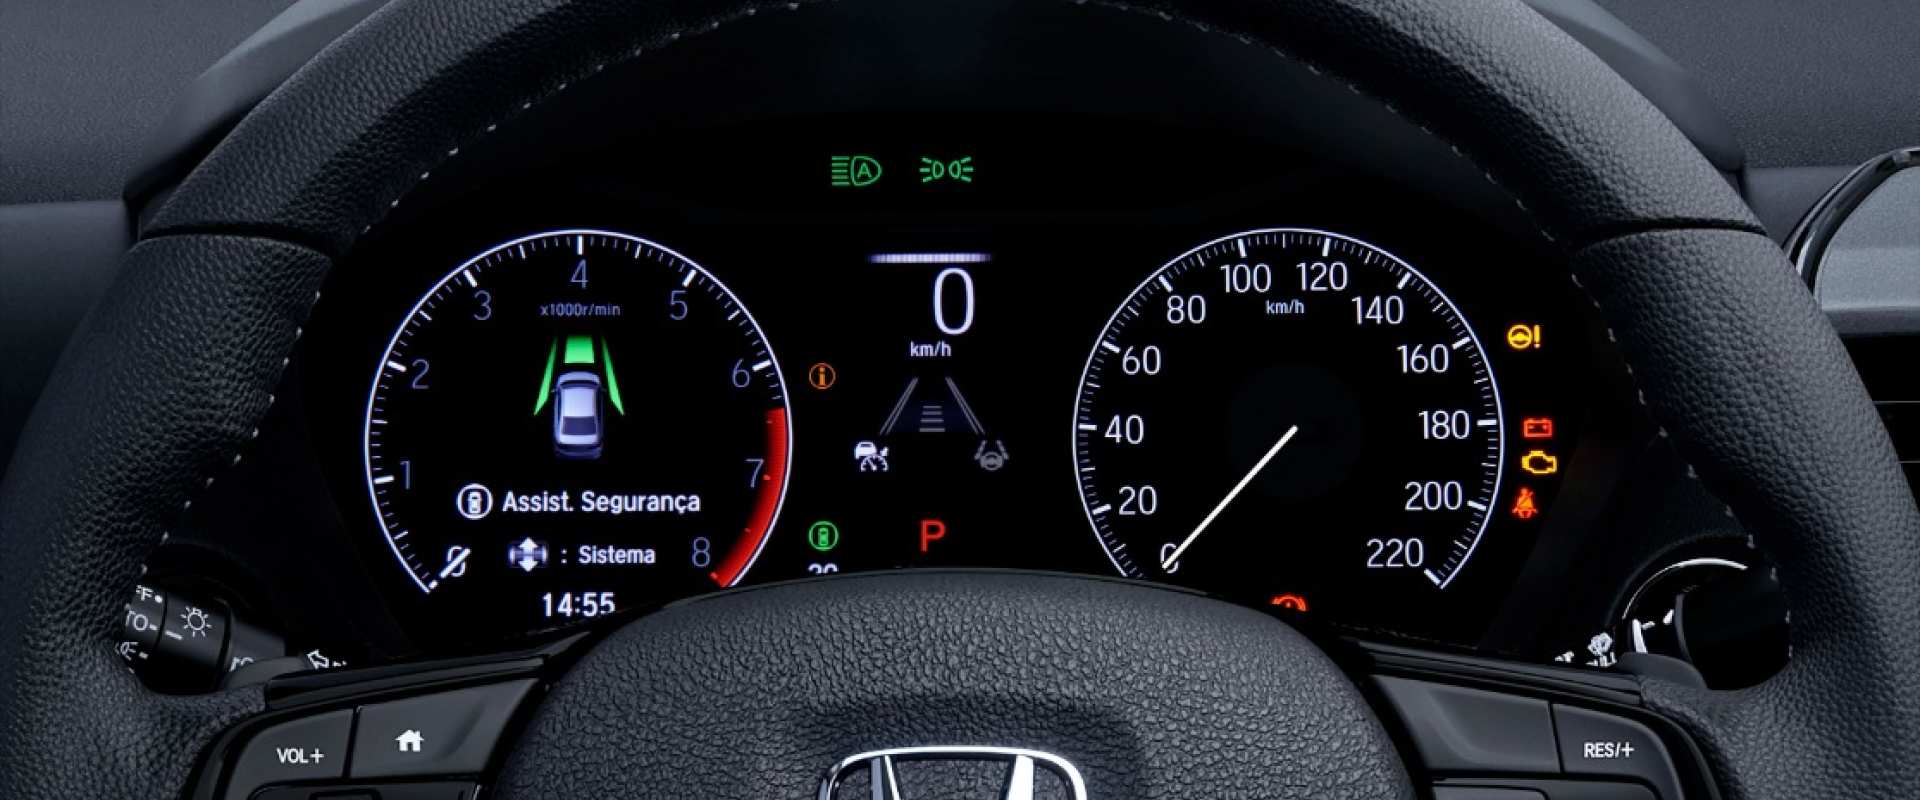 Honda Shori New City Hatch 40 cluster digital TFT meter.00012011